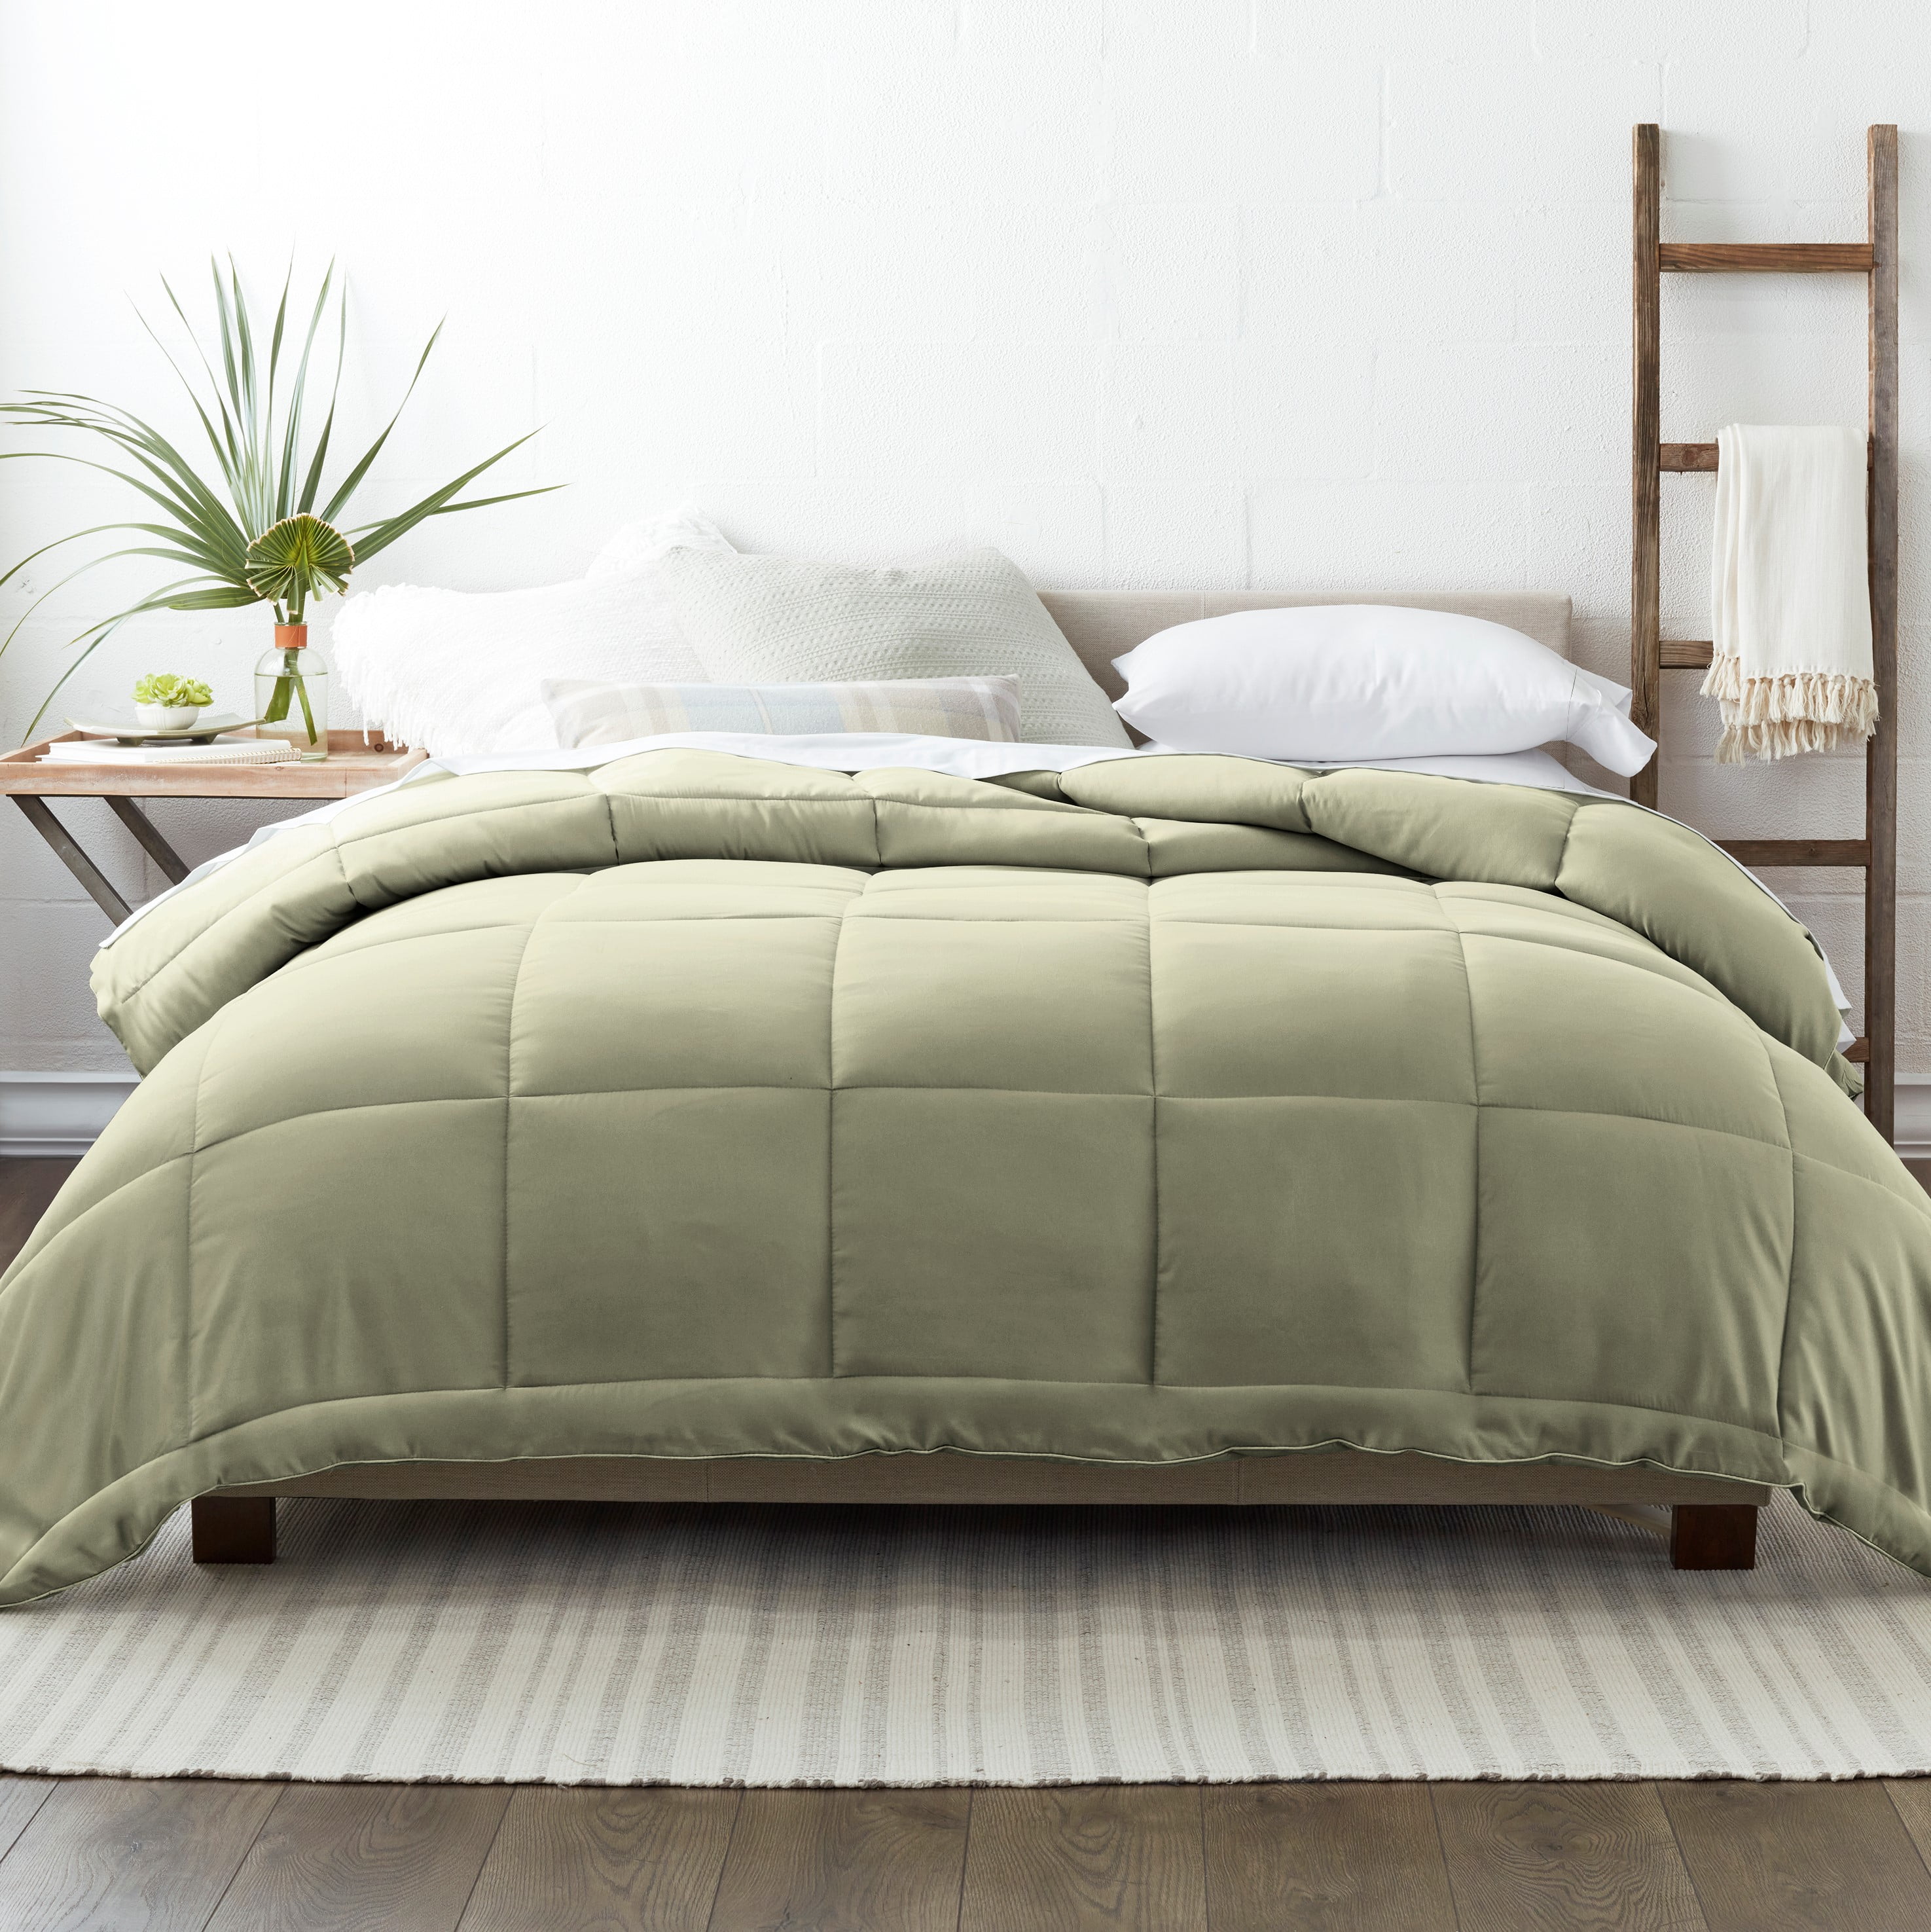 Details about   Tremendous All Season Down Alternative Comforter Sage Striped US Full XL Size 